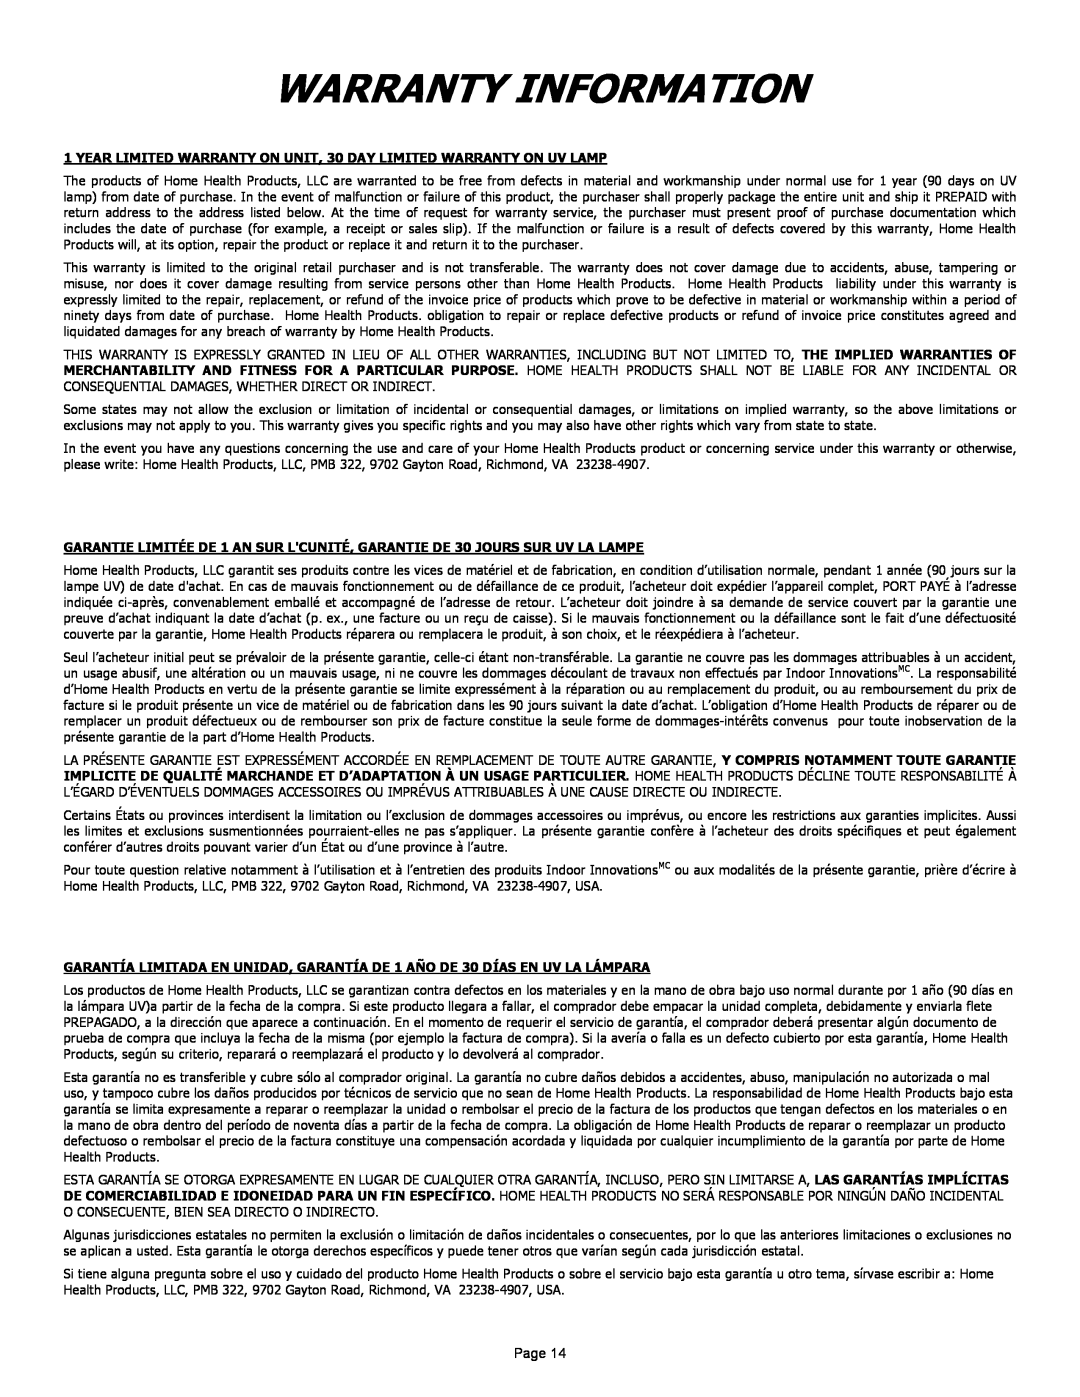 Air Health AH-RL, AH-1 instruction sheet Warranty Information, Page 